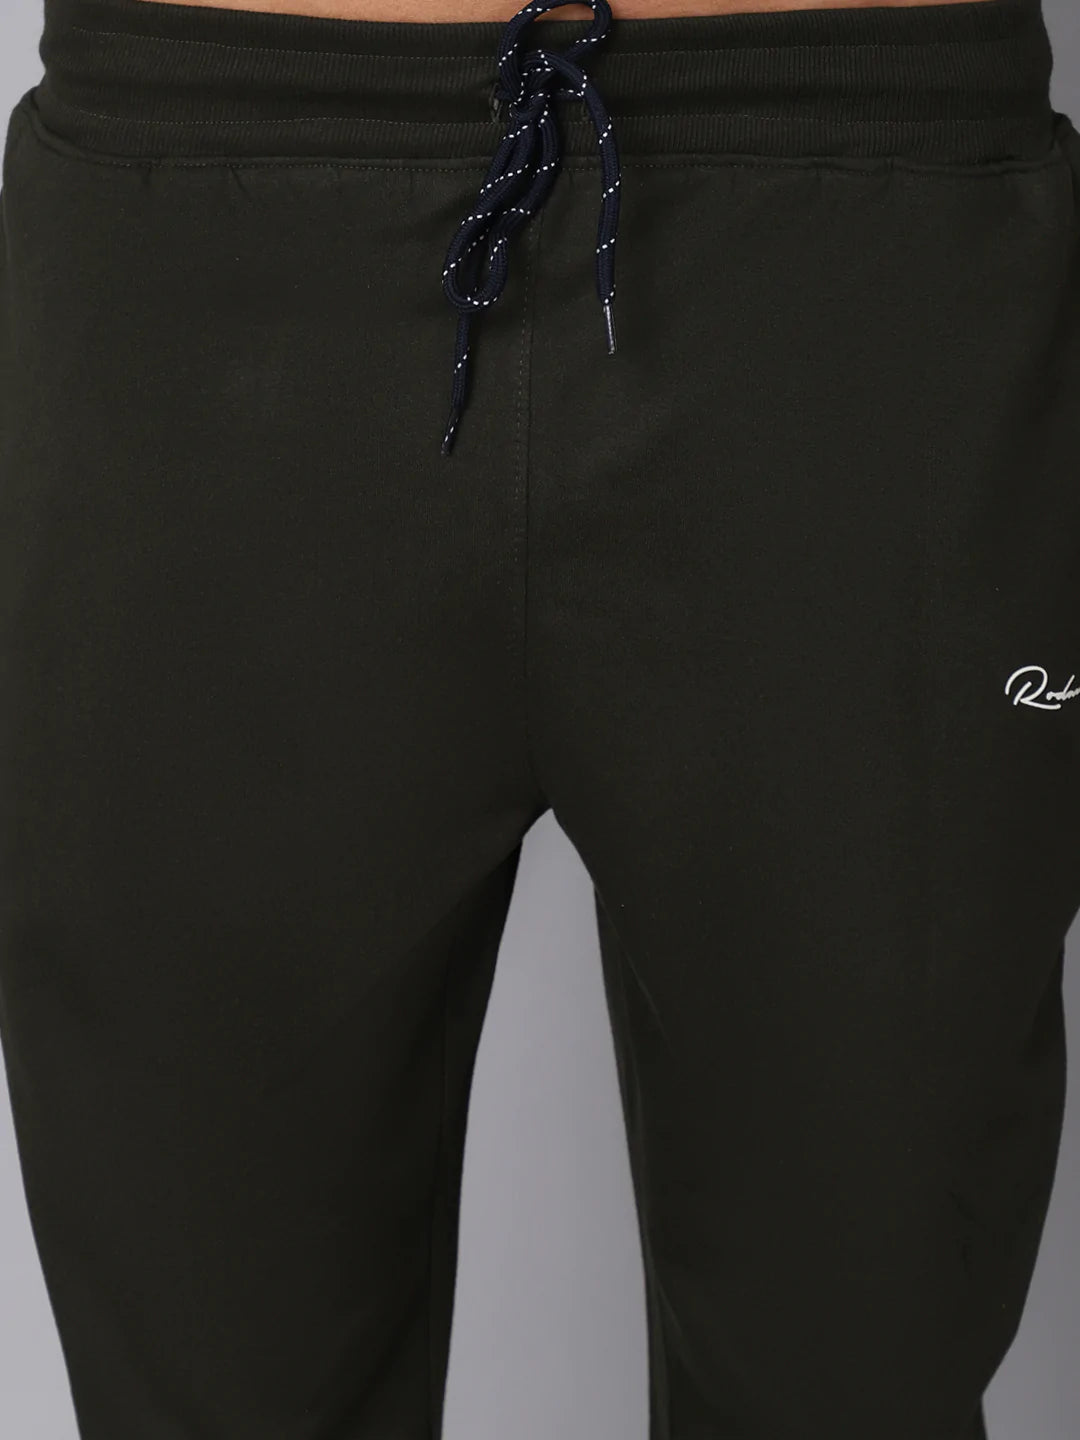 $275 Purple Brand Men's Black Tricot Track Pants Size XL | eBay